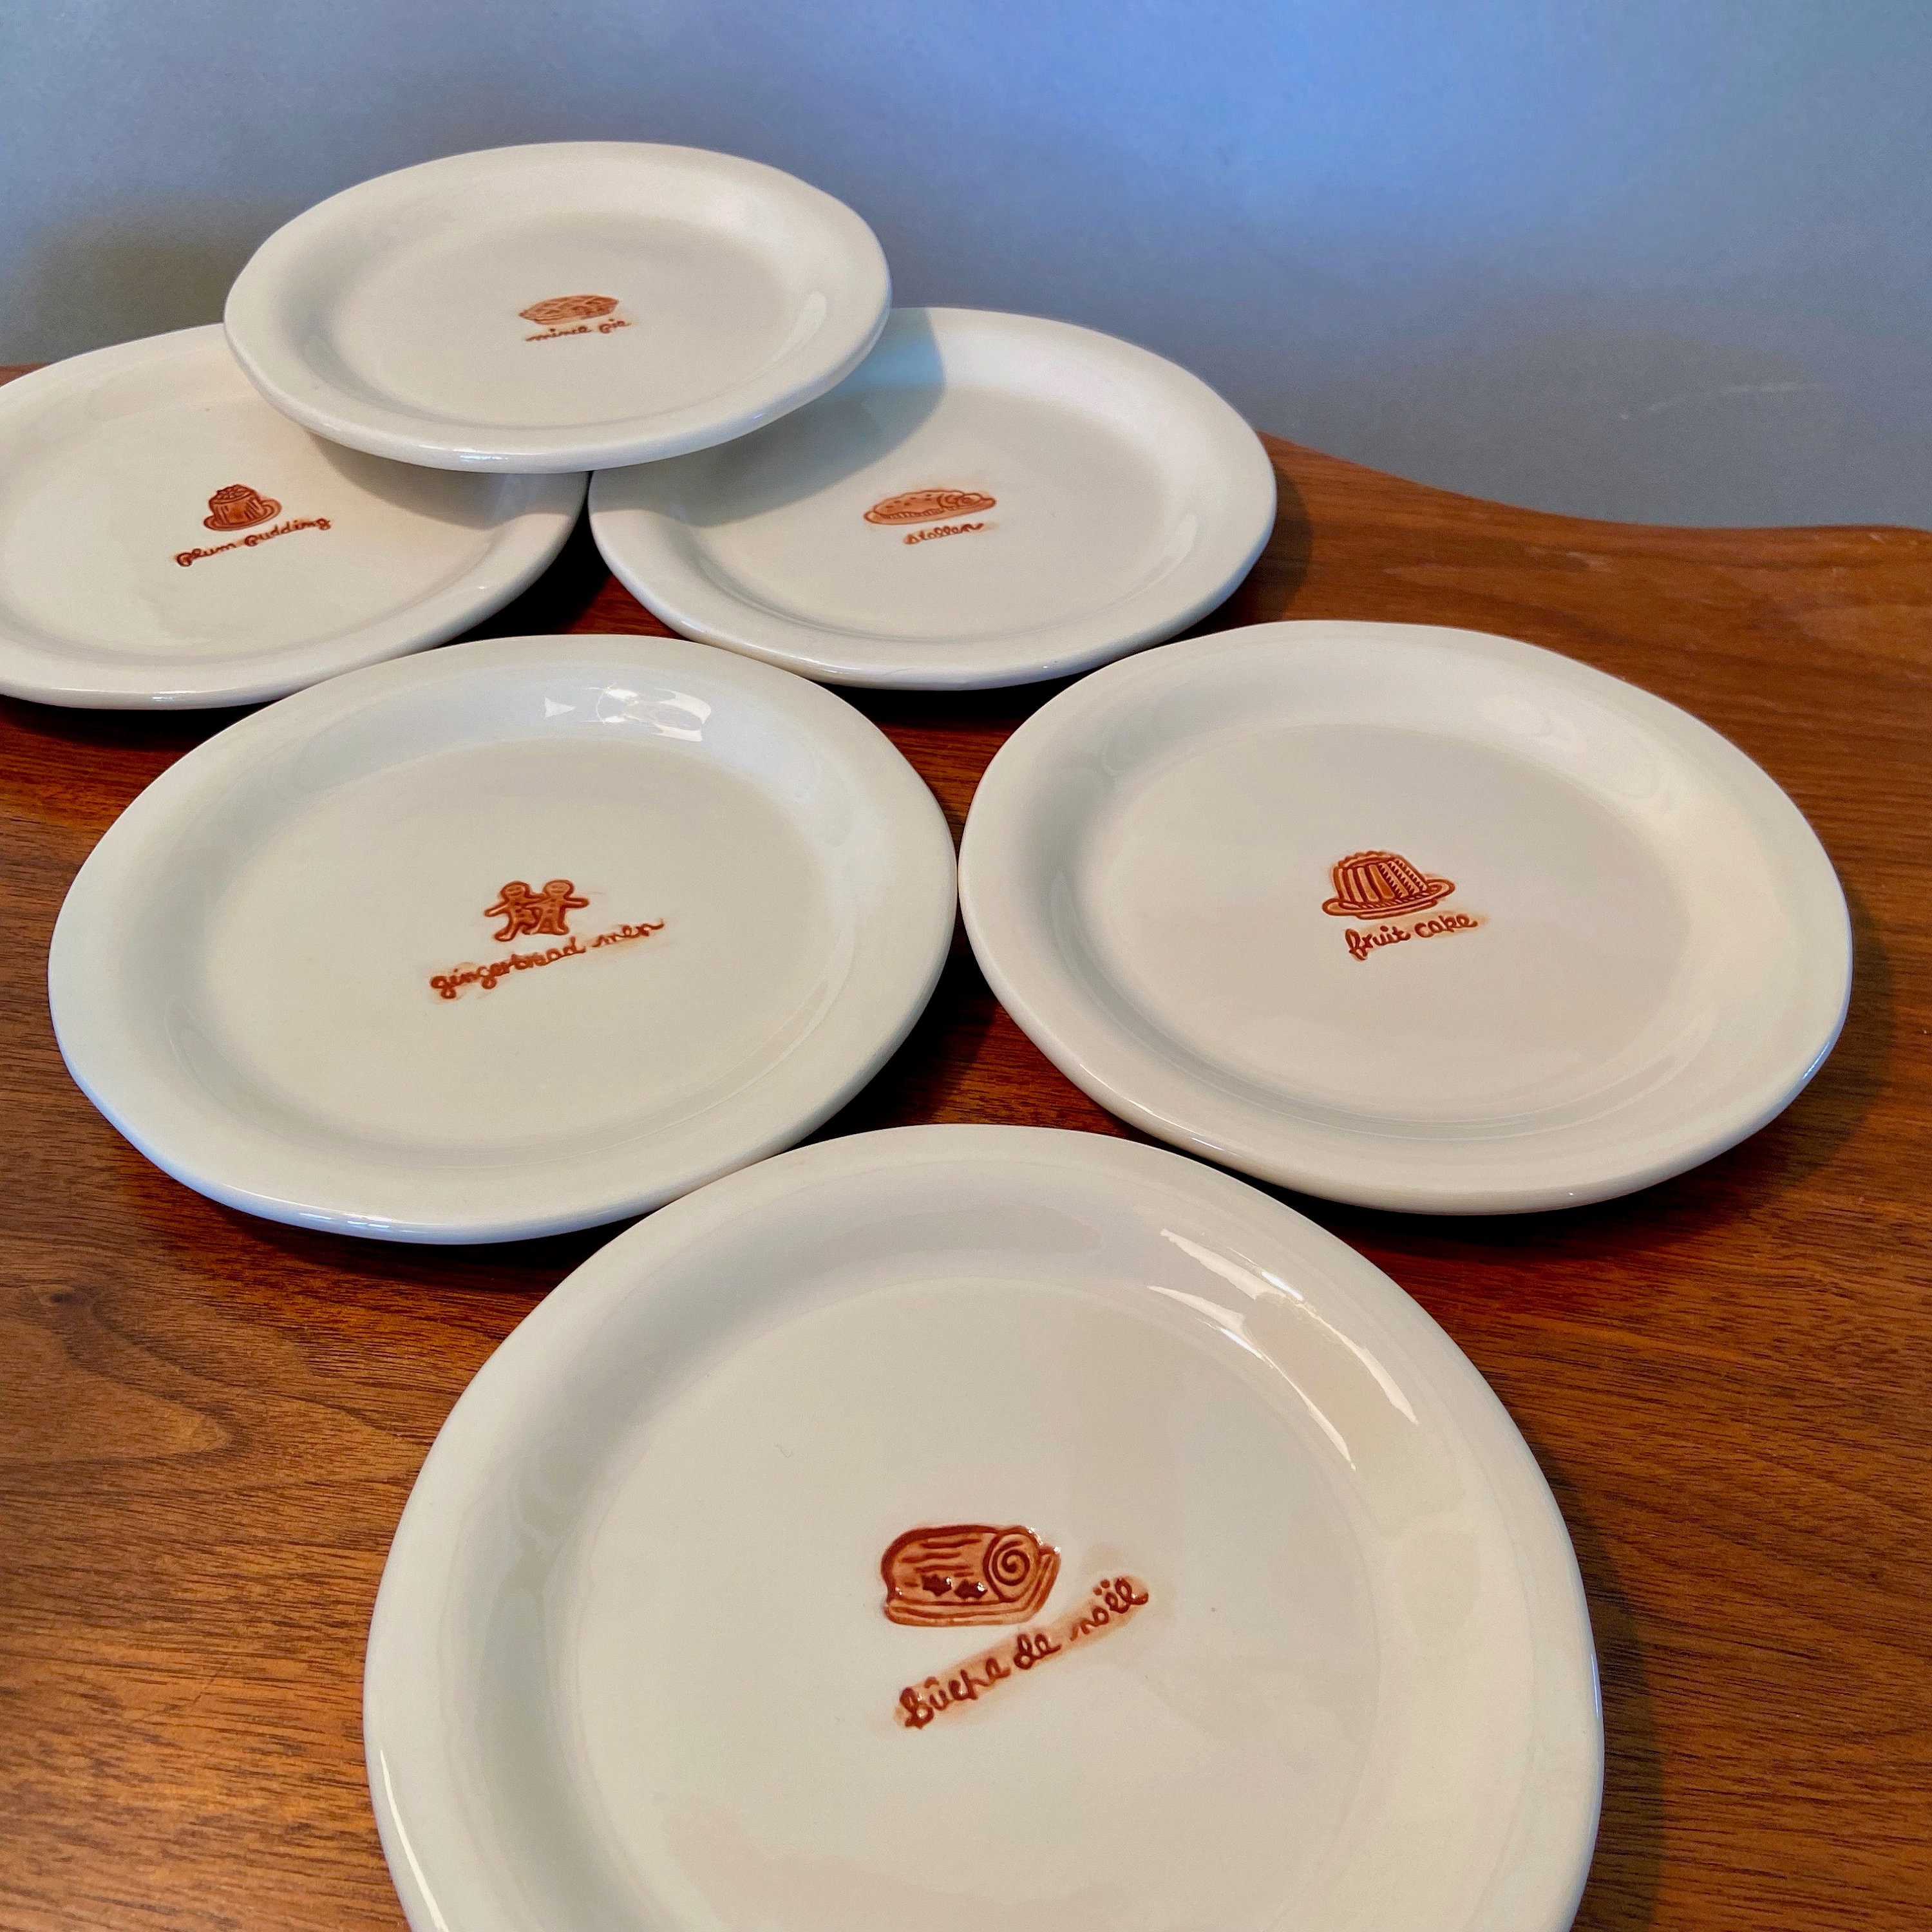 Williams Sonoma Traditional 6-Piece Bakeware Set